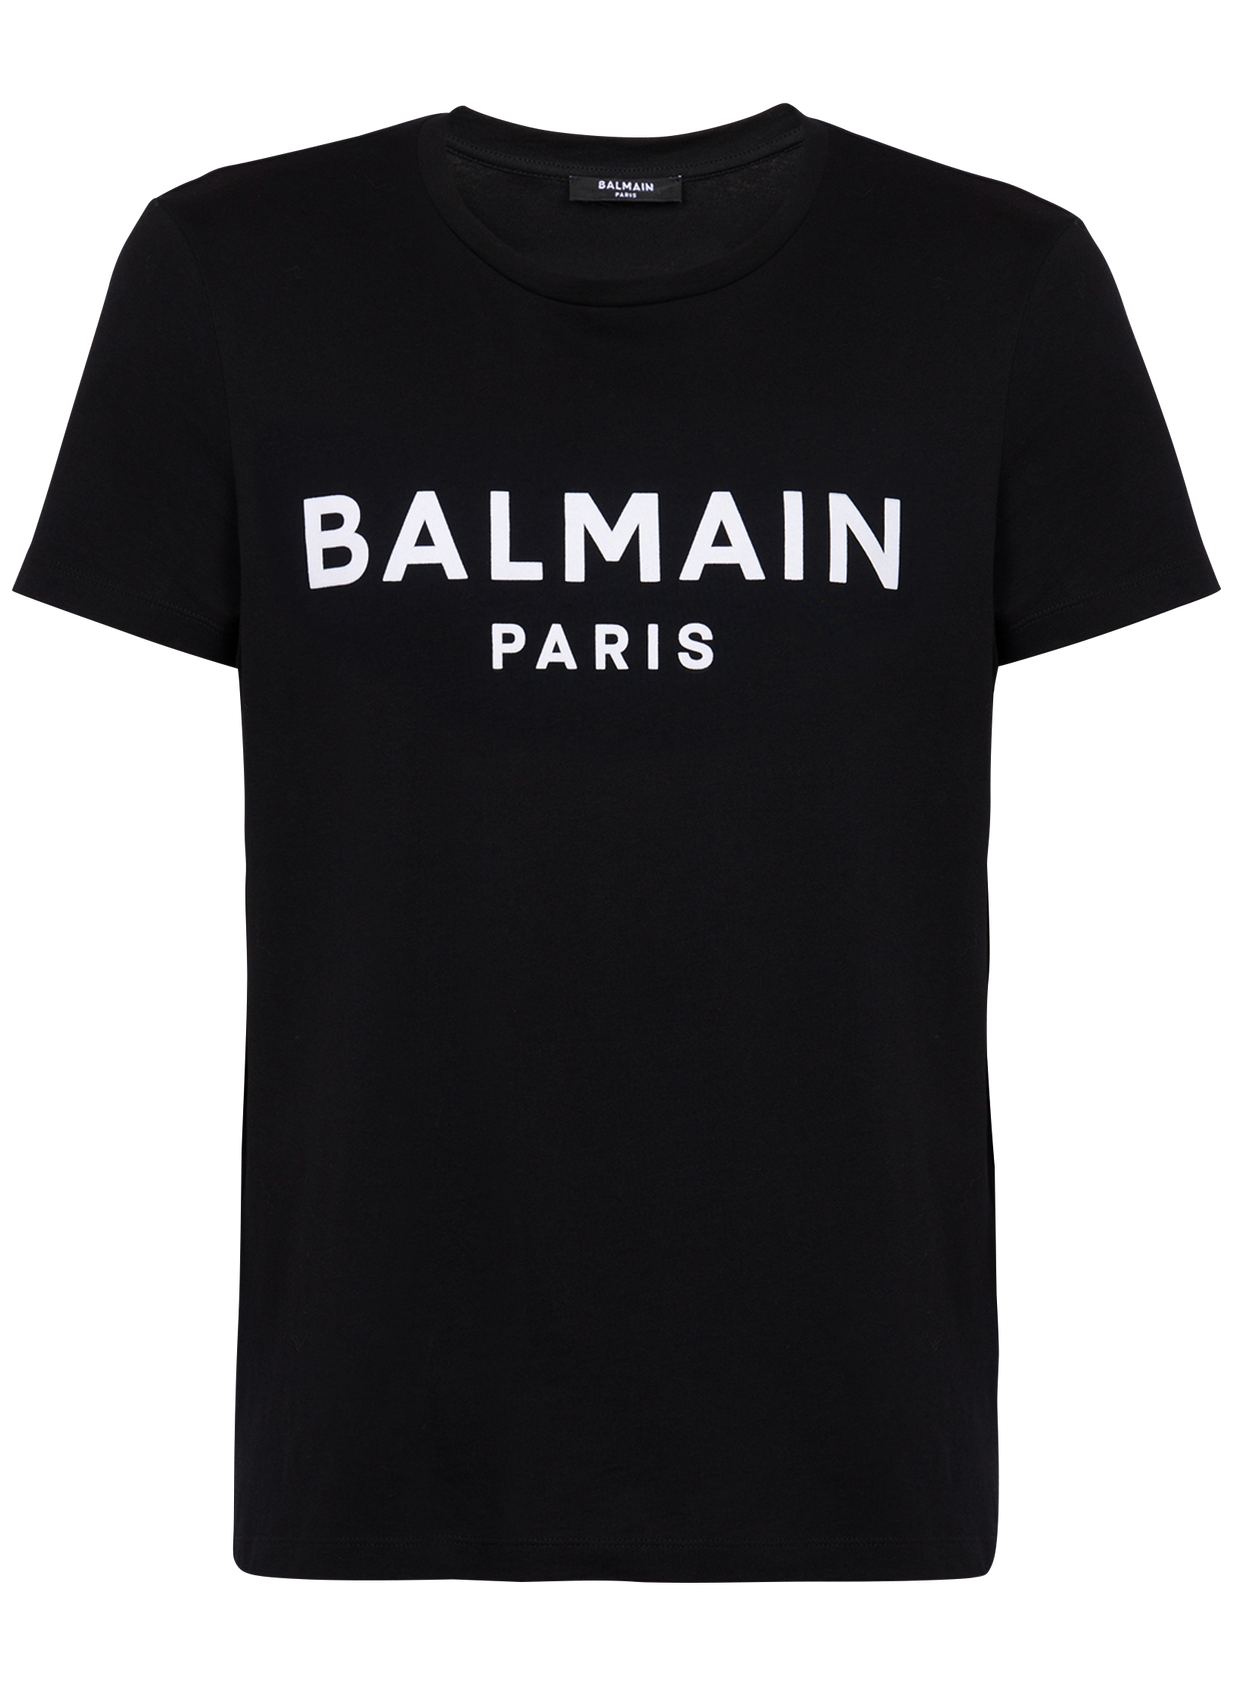 BALMAIN PRINTED T-SHIRT CLASSIC FIT - NOIR/BLANC